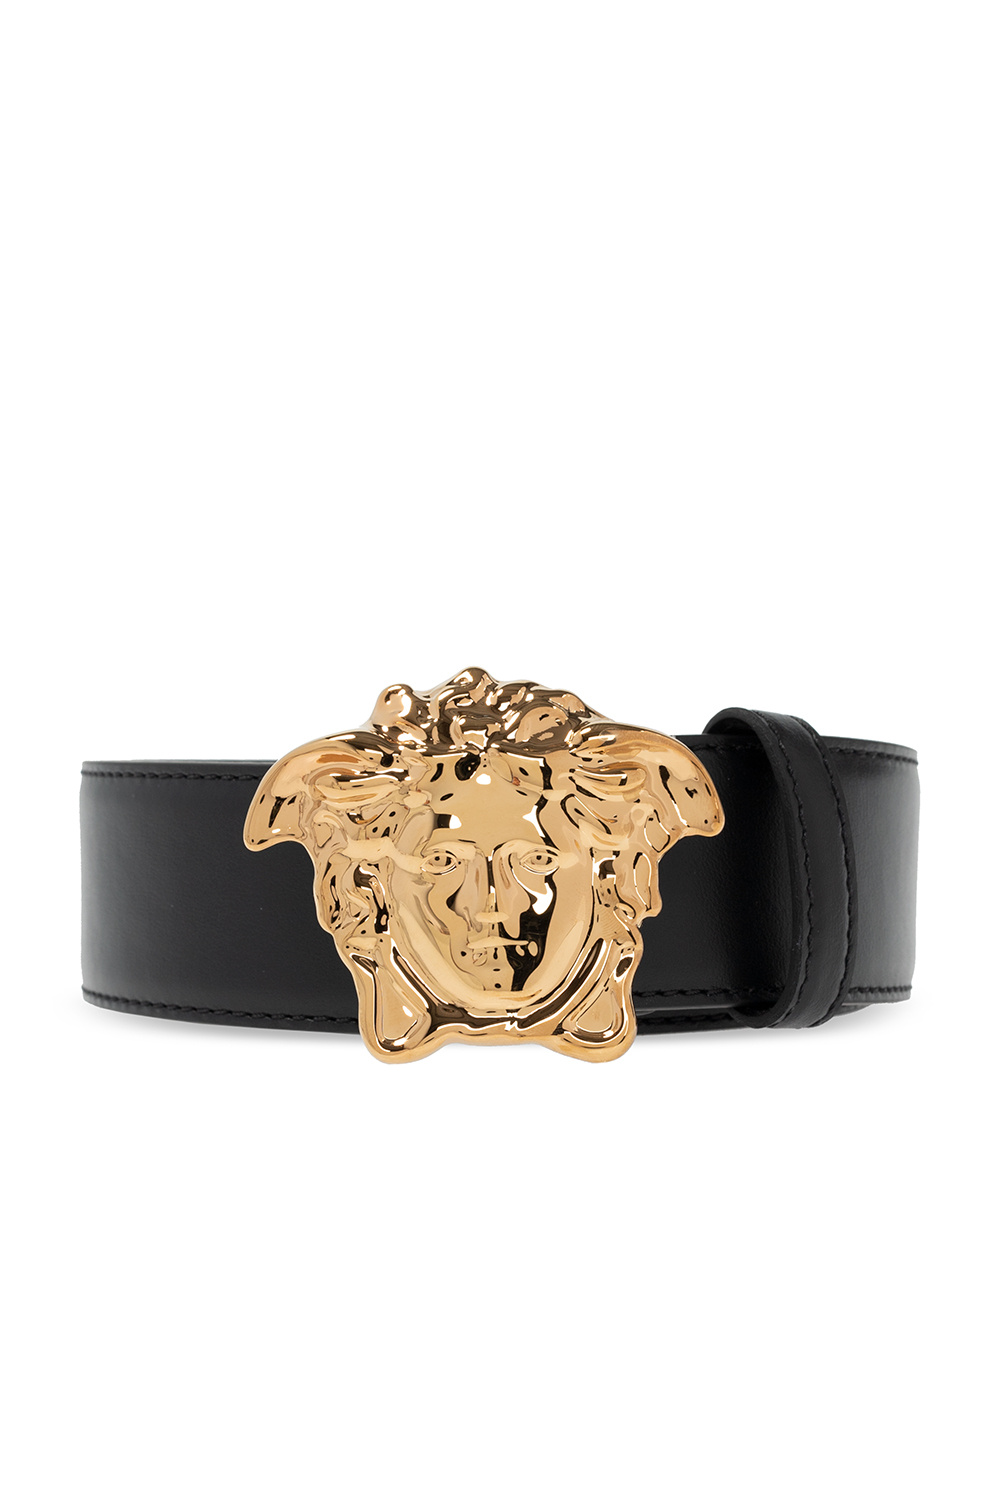 Versace Men's Black Leather Medusa Buckle Belt, Brand Size 105 CM